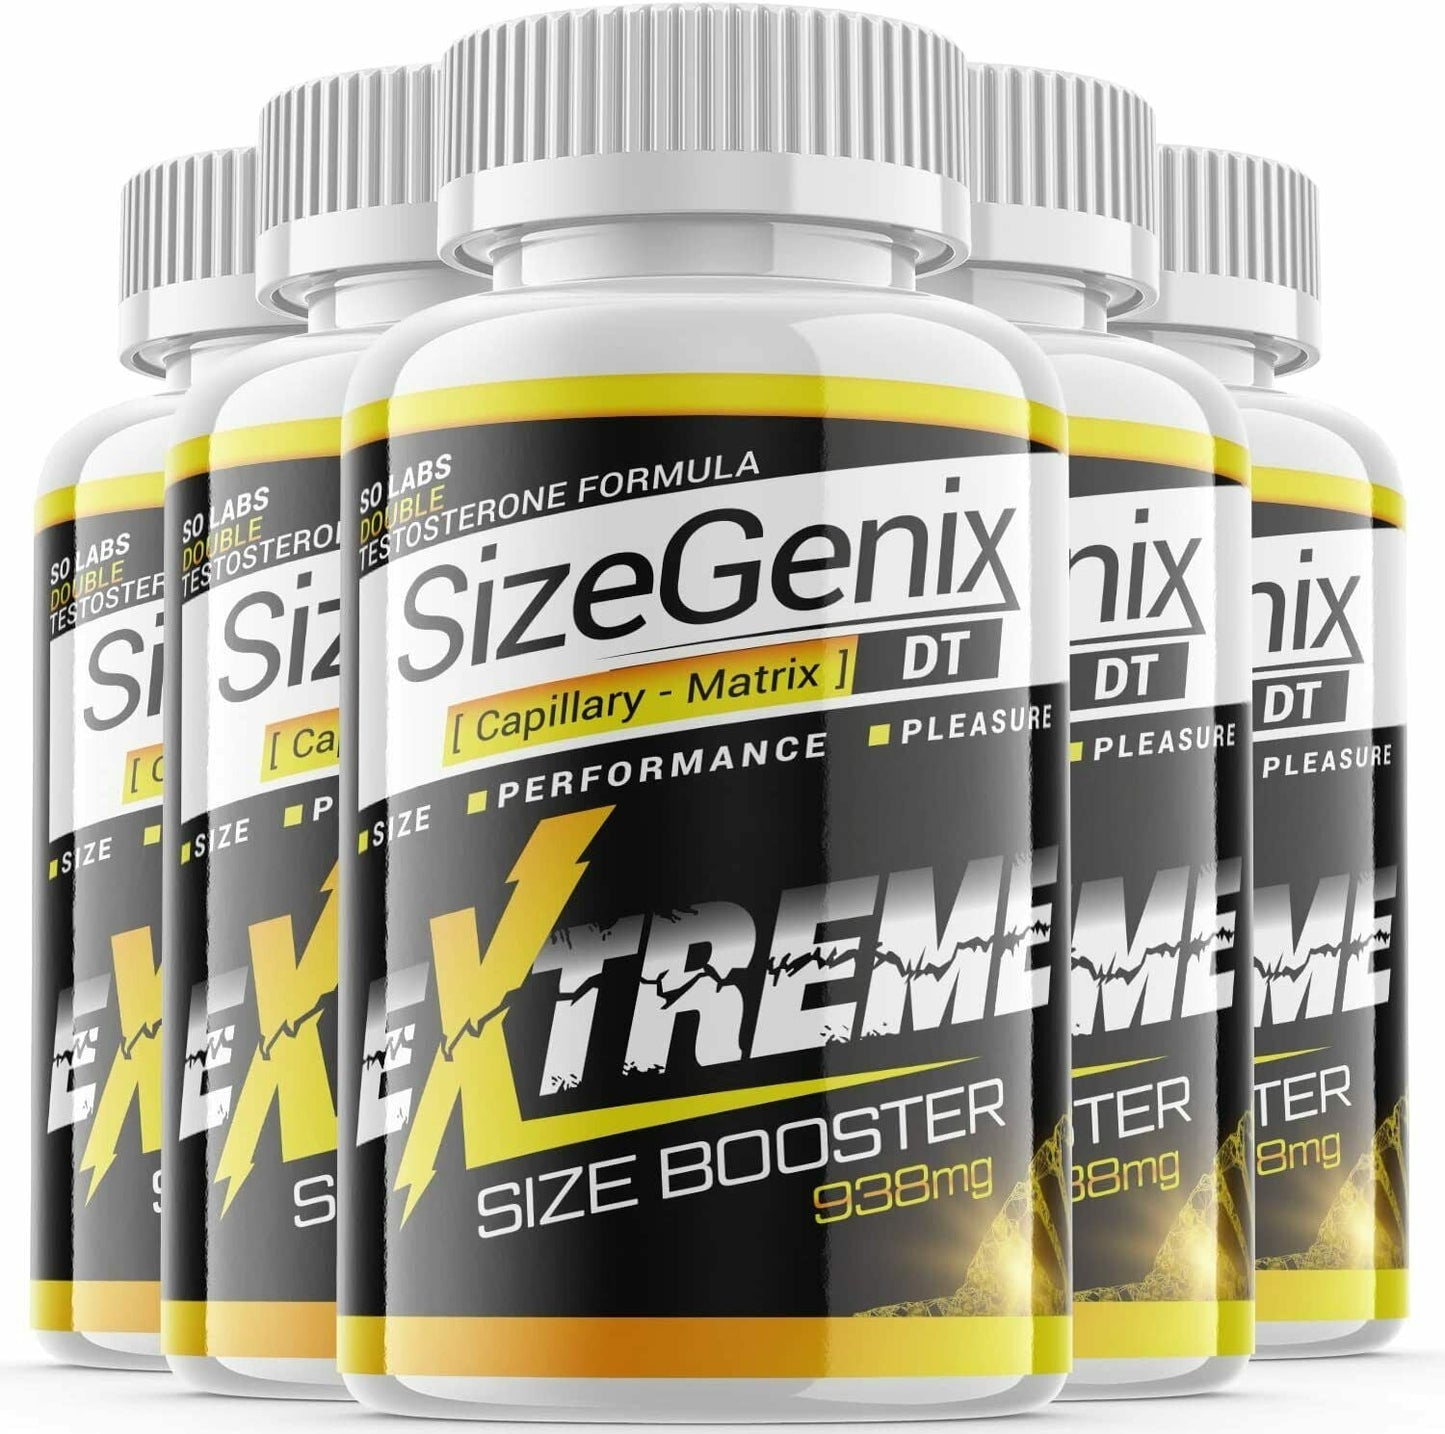 Sizegenix Male Enhancement Pills